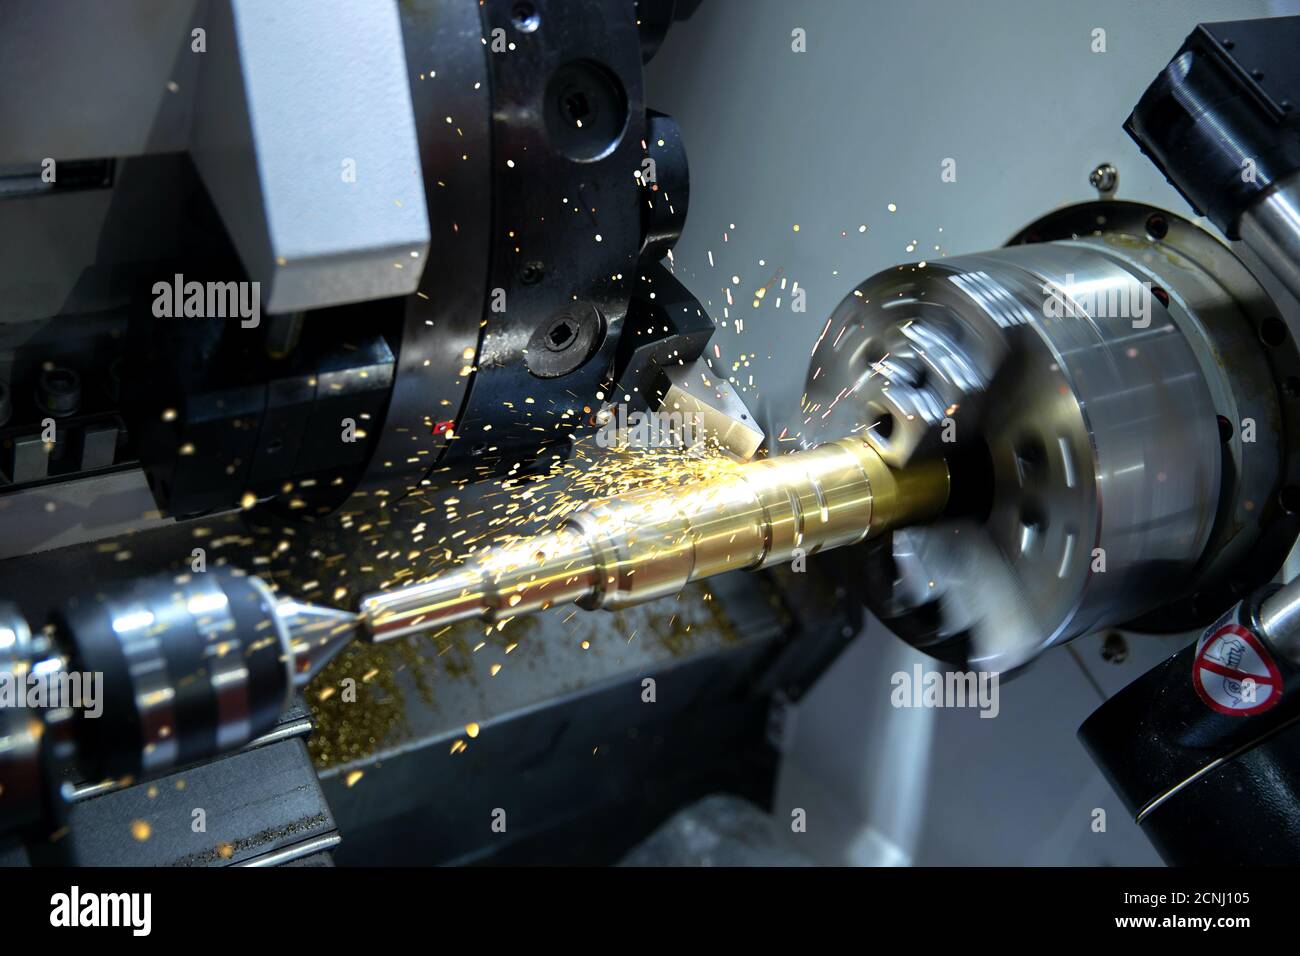 The CNC lathe or turing machine Stock Photo - Alamy